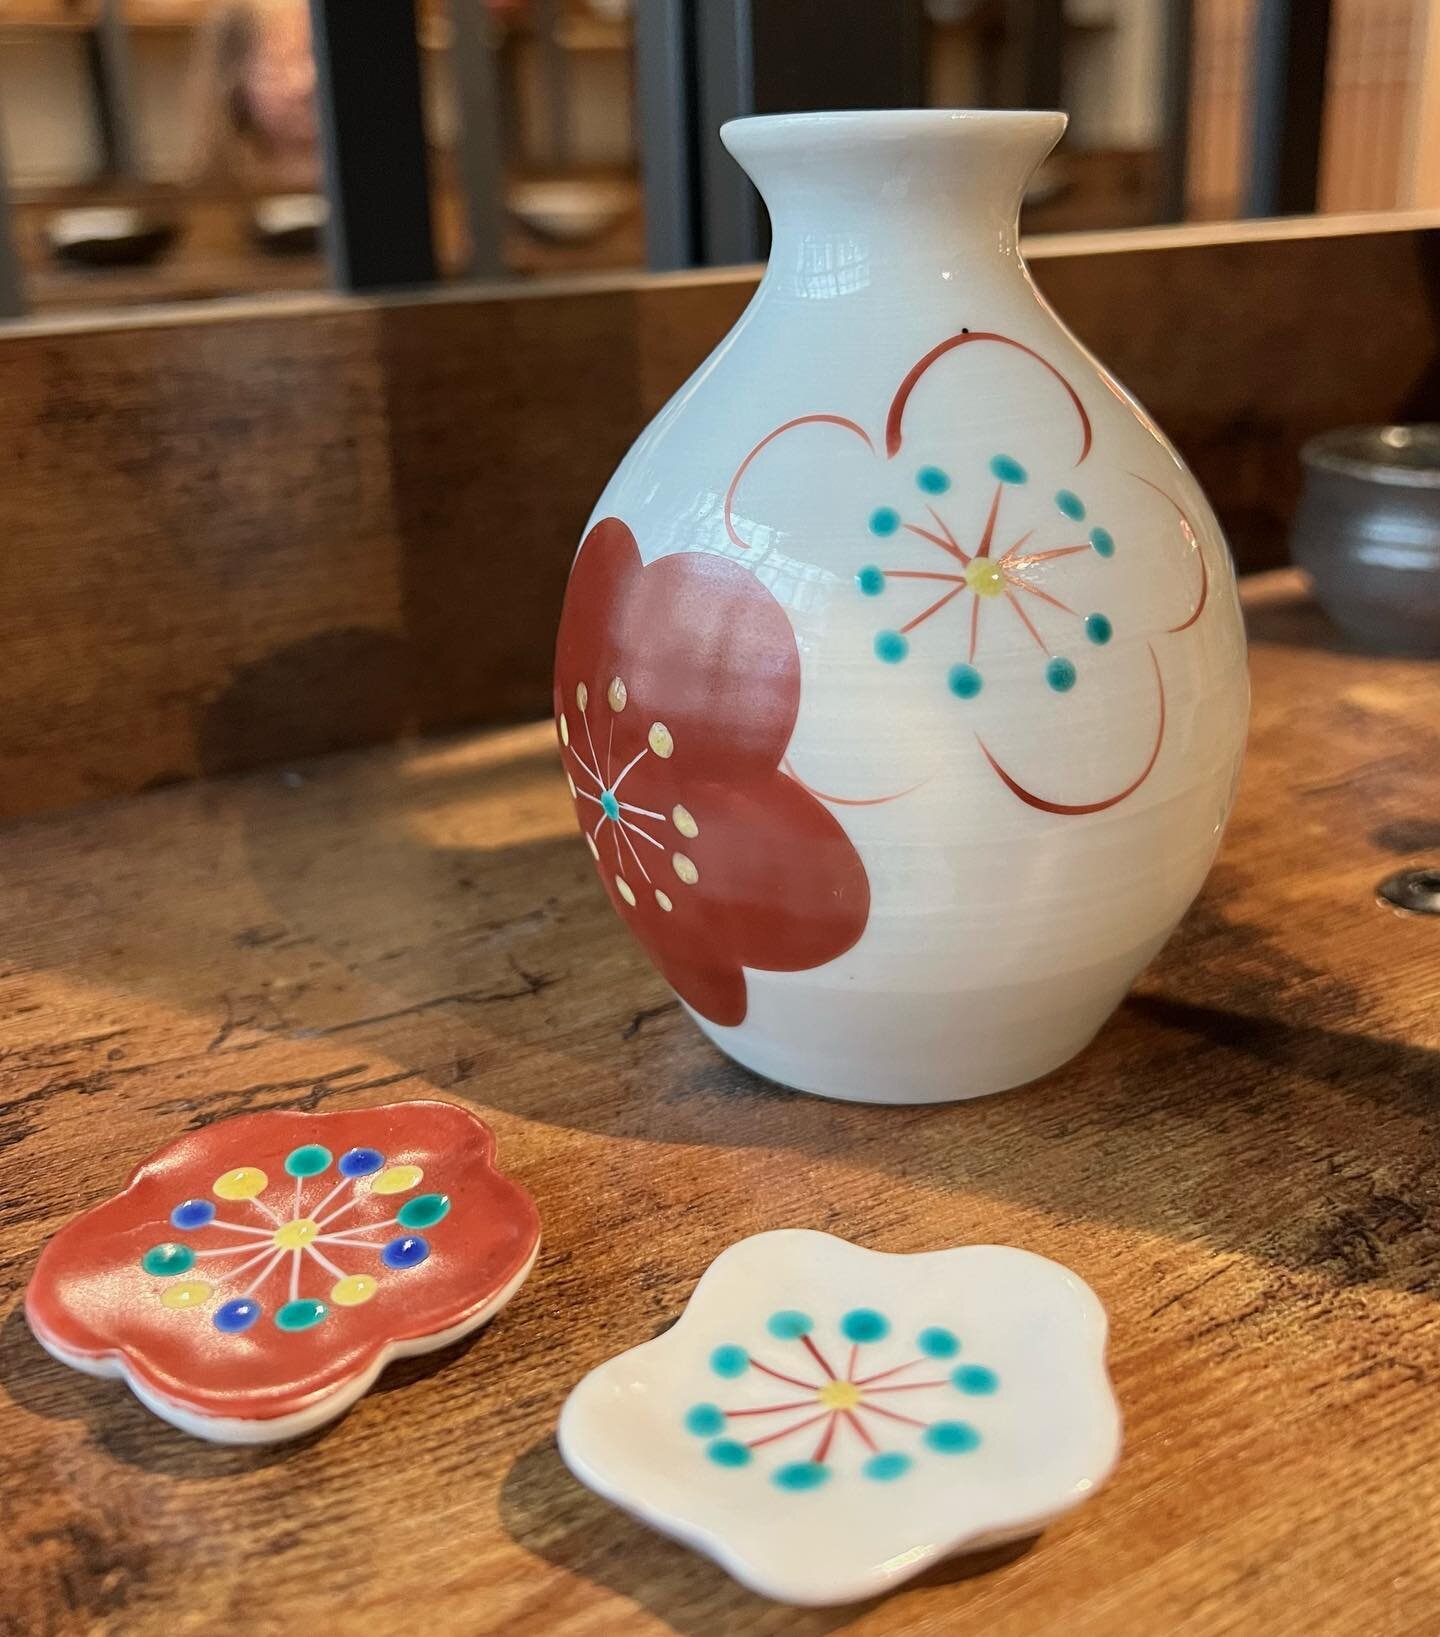 The cutest little ceramics at Setomonoya 🌸

#theloft #theloftatjapanvillage #japanvillagebrooklyn #industrycity #ic #japan #japaneseart #ceramics #ceramicart #porcelain #japaneseceramics #grandopening #comingsoon #brooklynevents #nycevents #ceramics